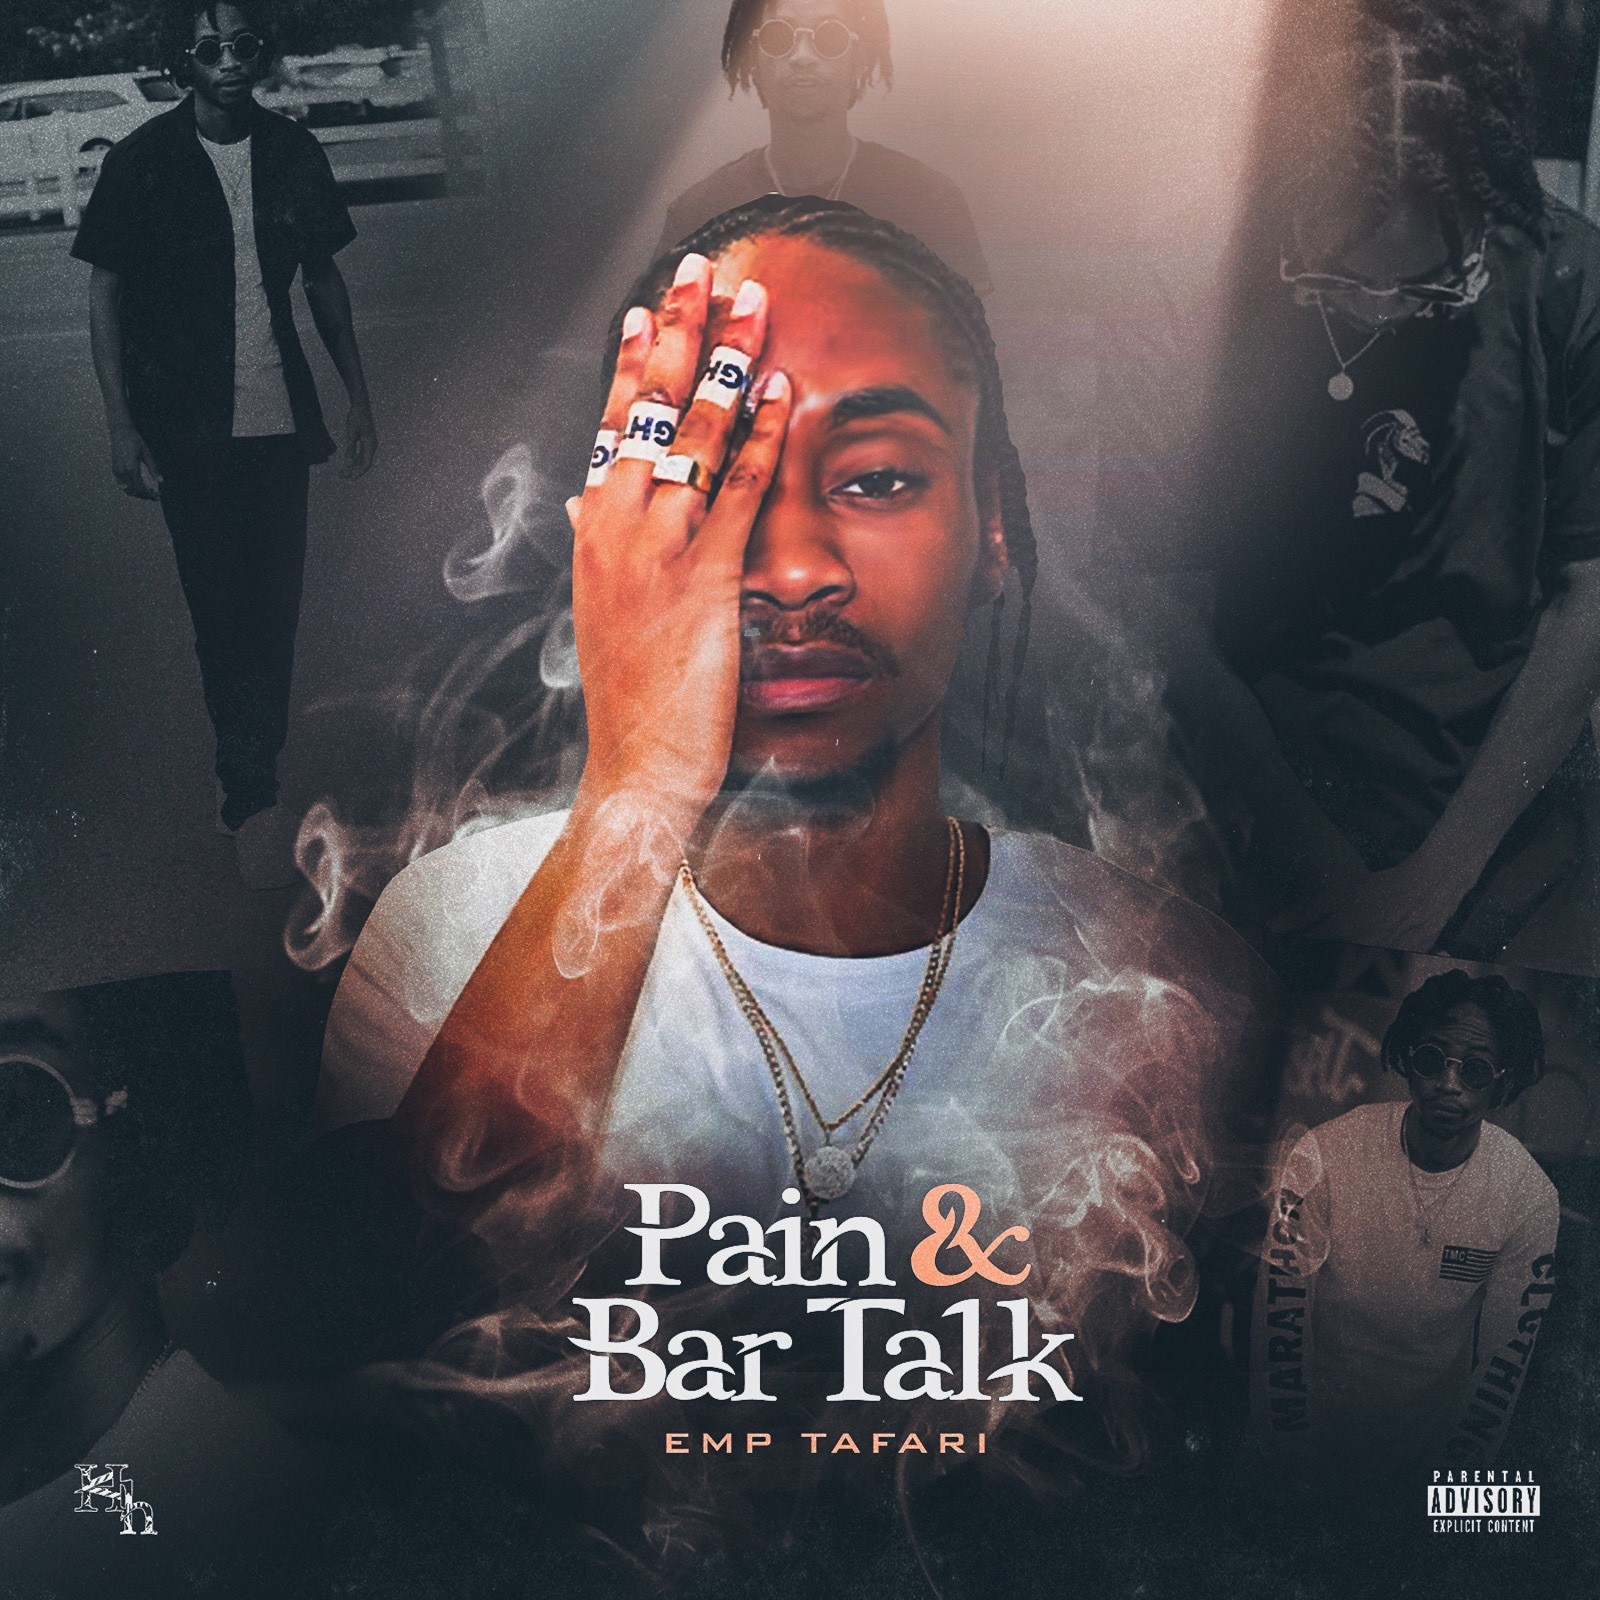 Pain & Bar Talk